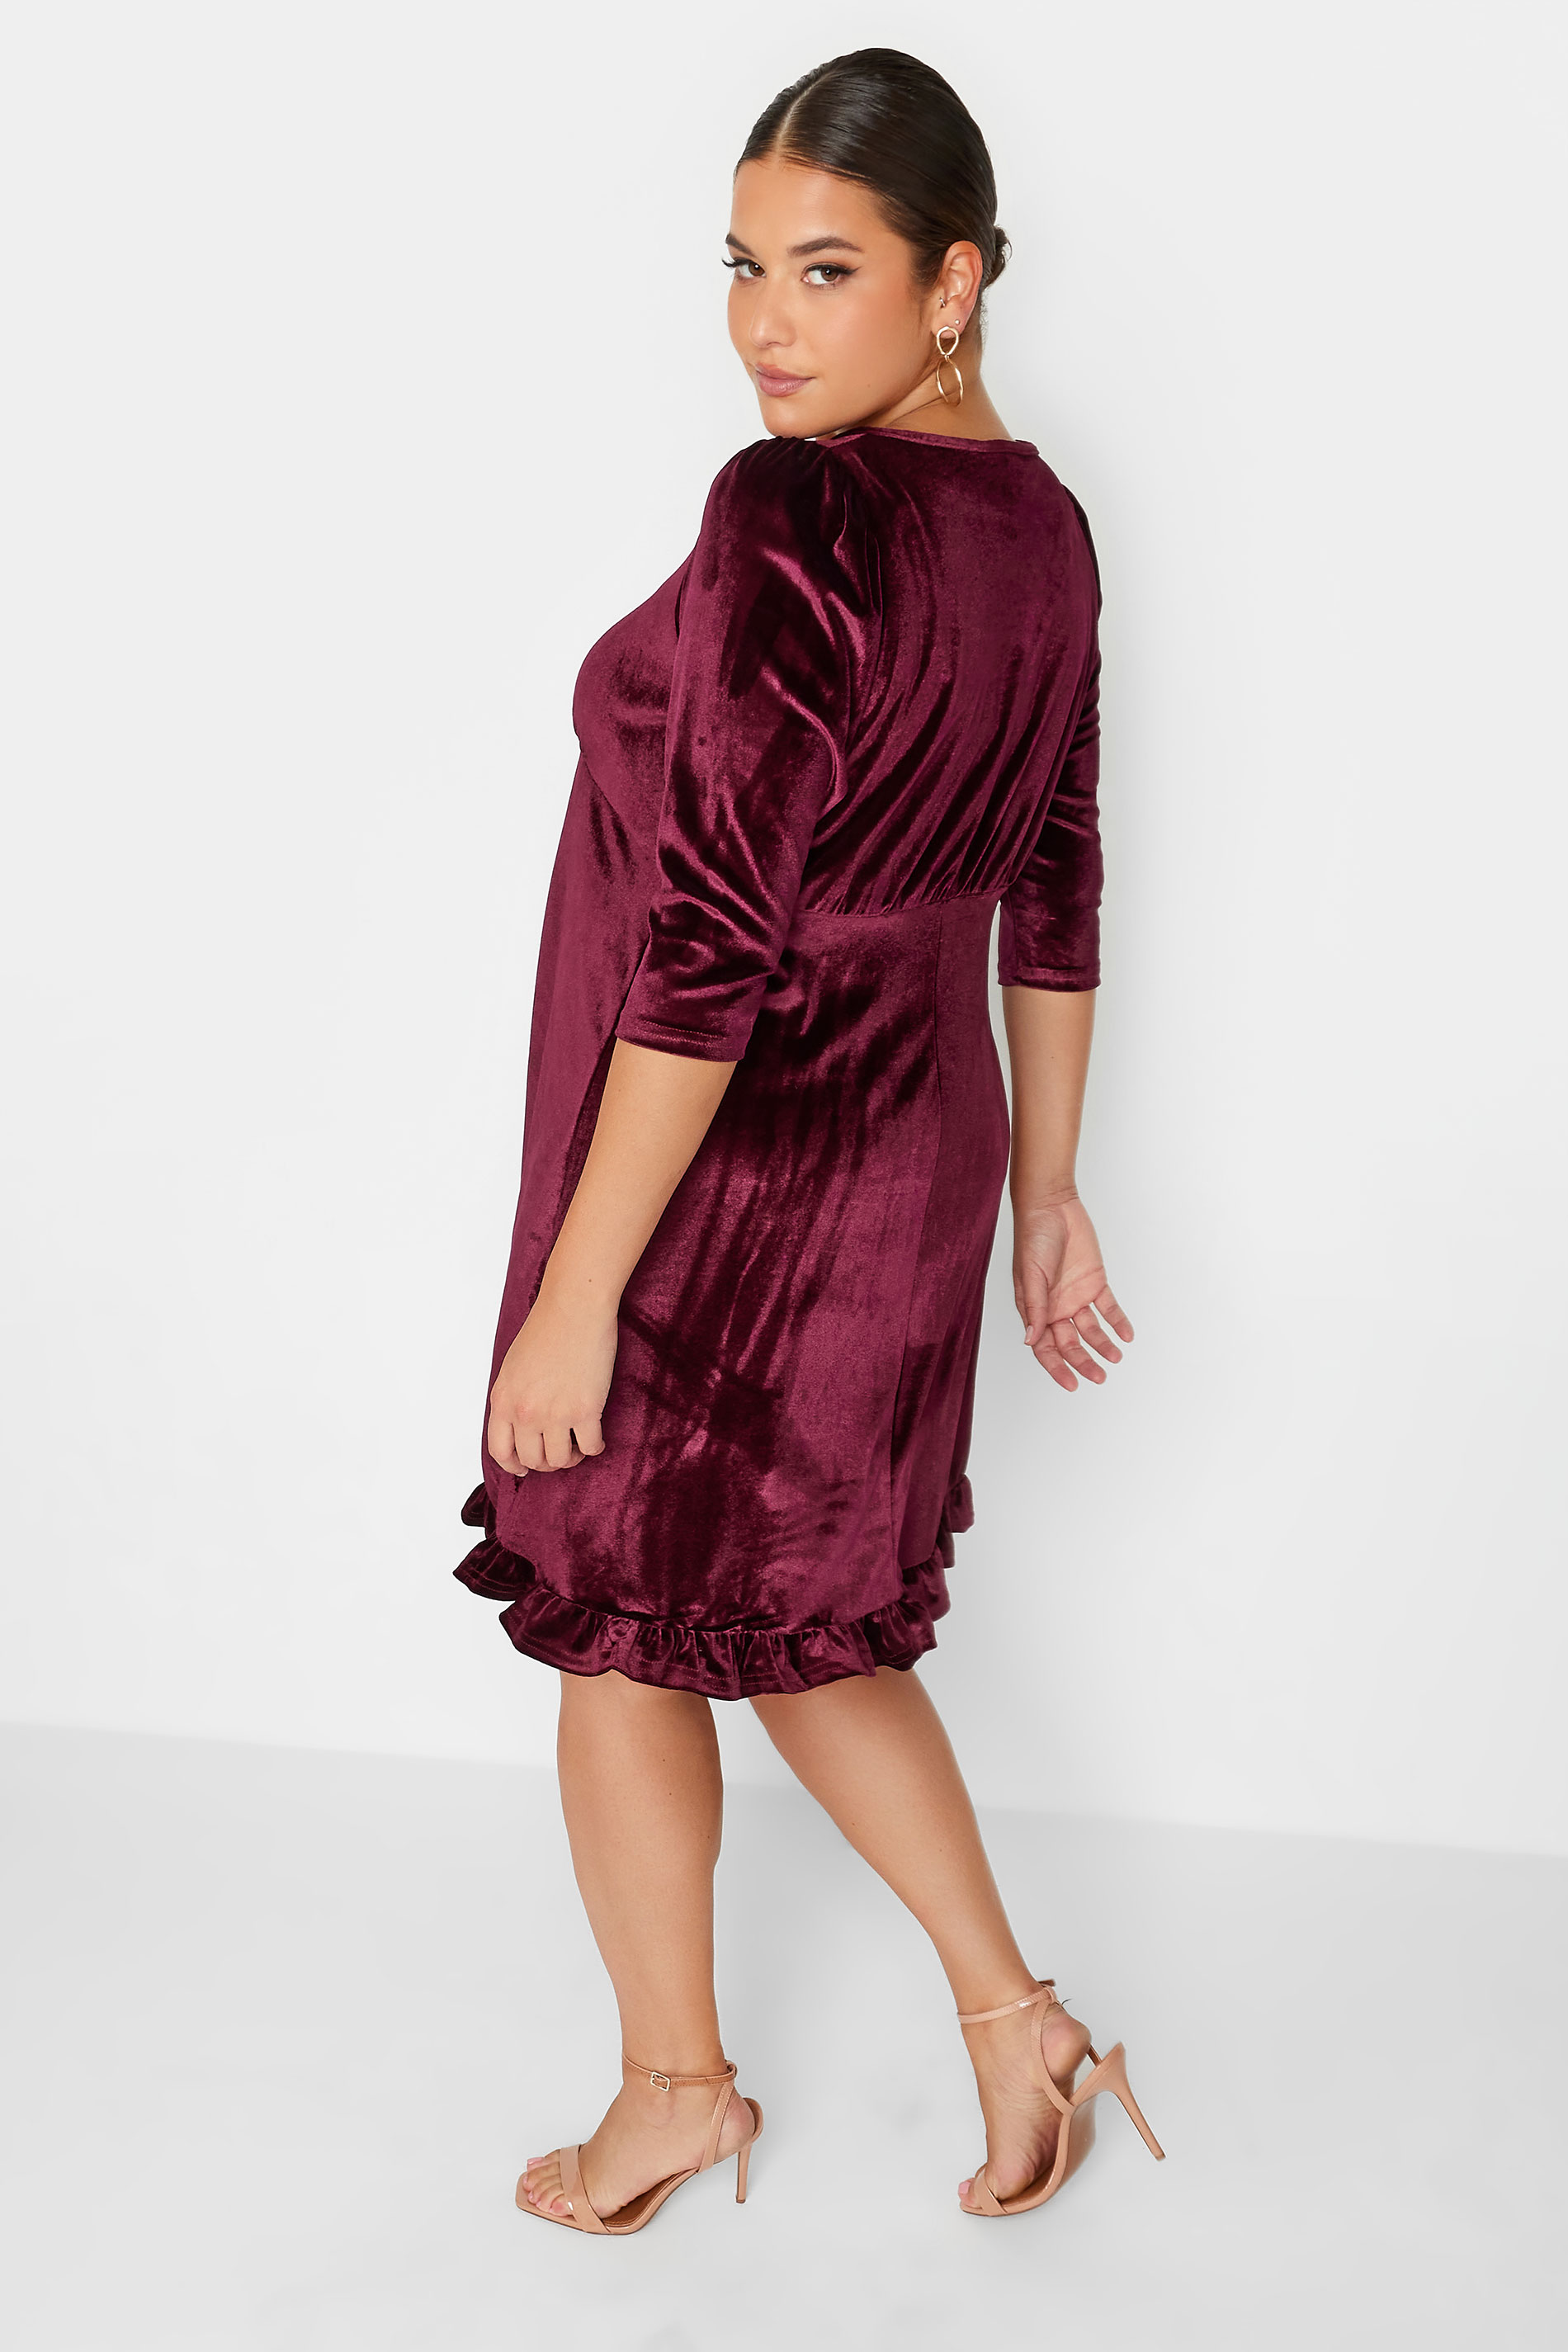 Curve Plus Size Womens Burgundy Red Velvet Midi Dress 3